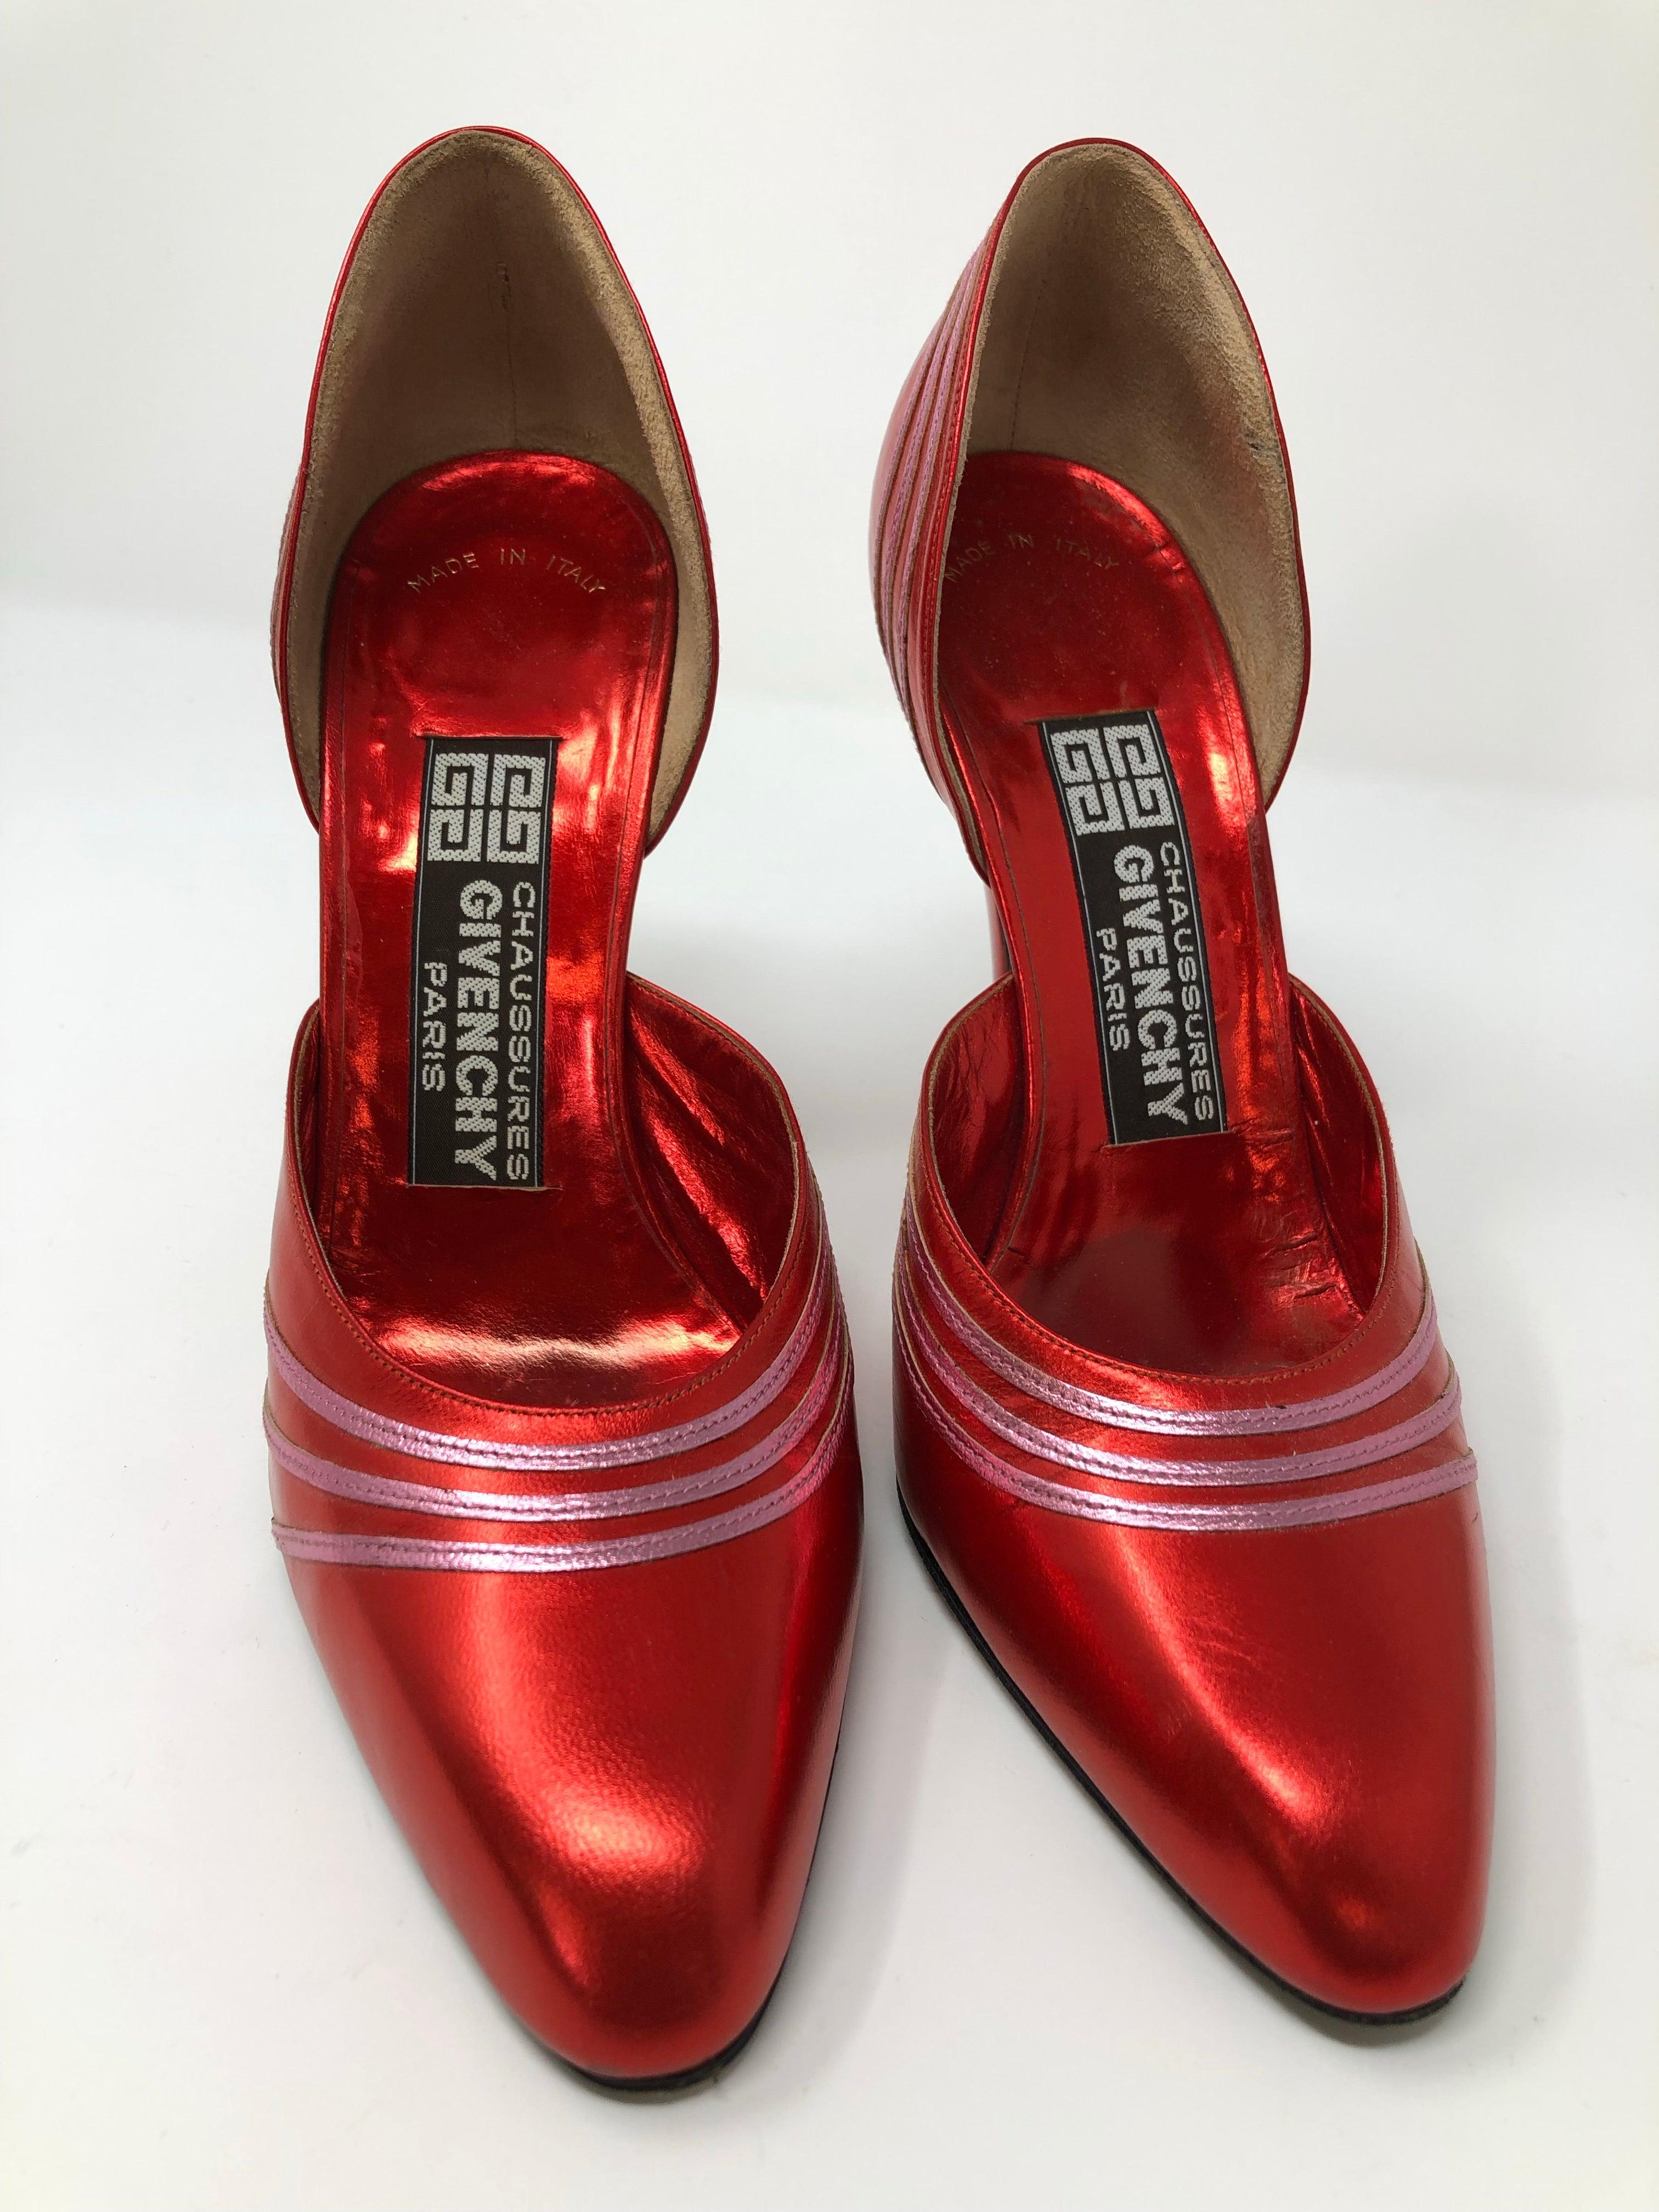 Givenchy Vintage Metallic Red Leather Shoes Size 6M (UK4) – Ava & Iva